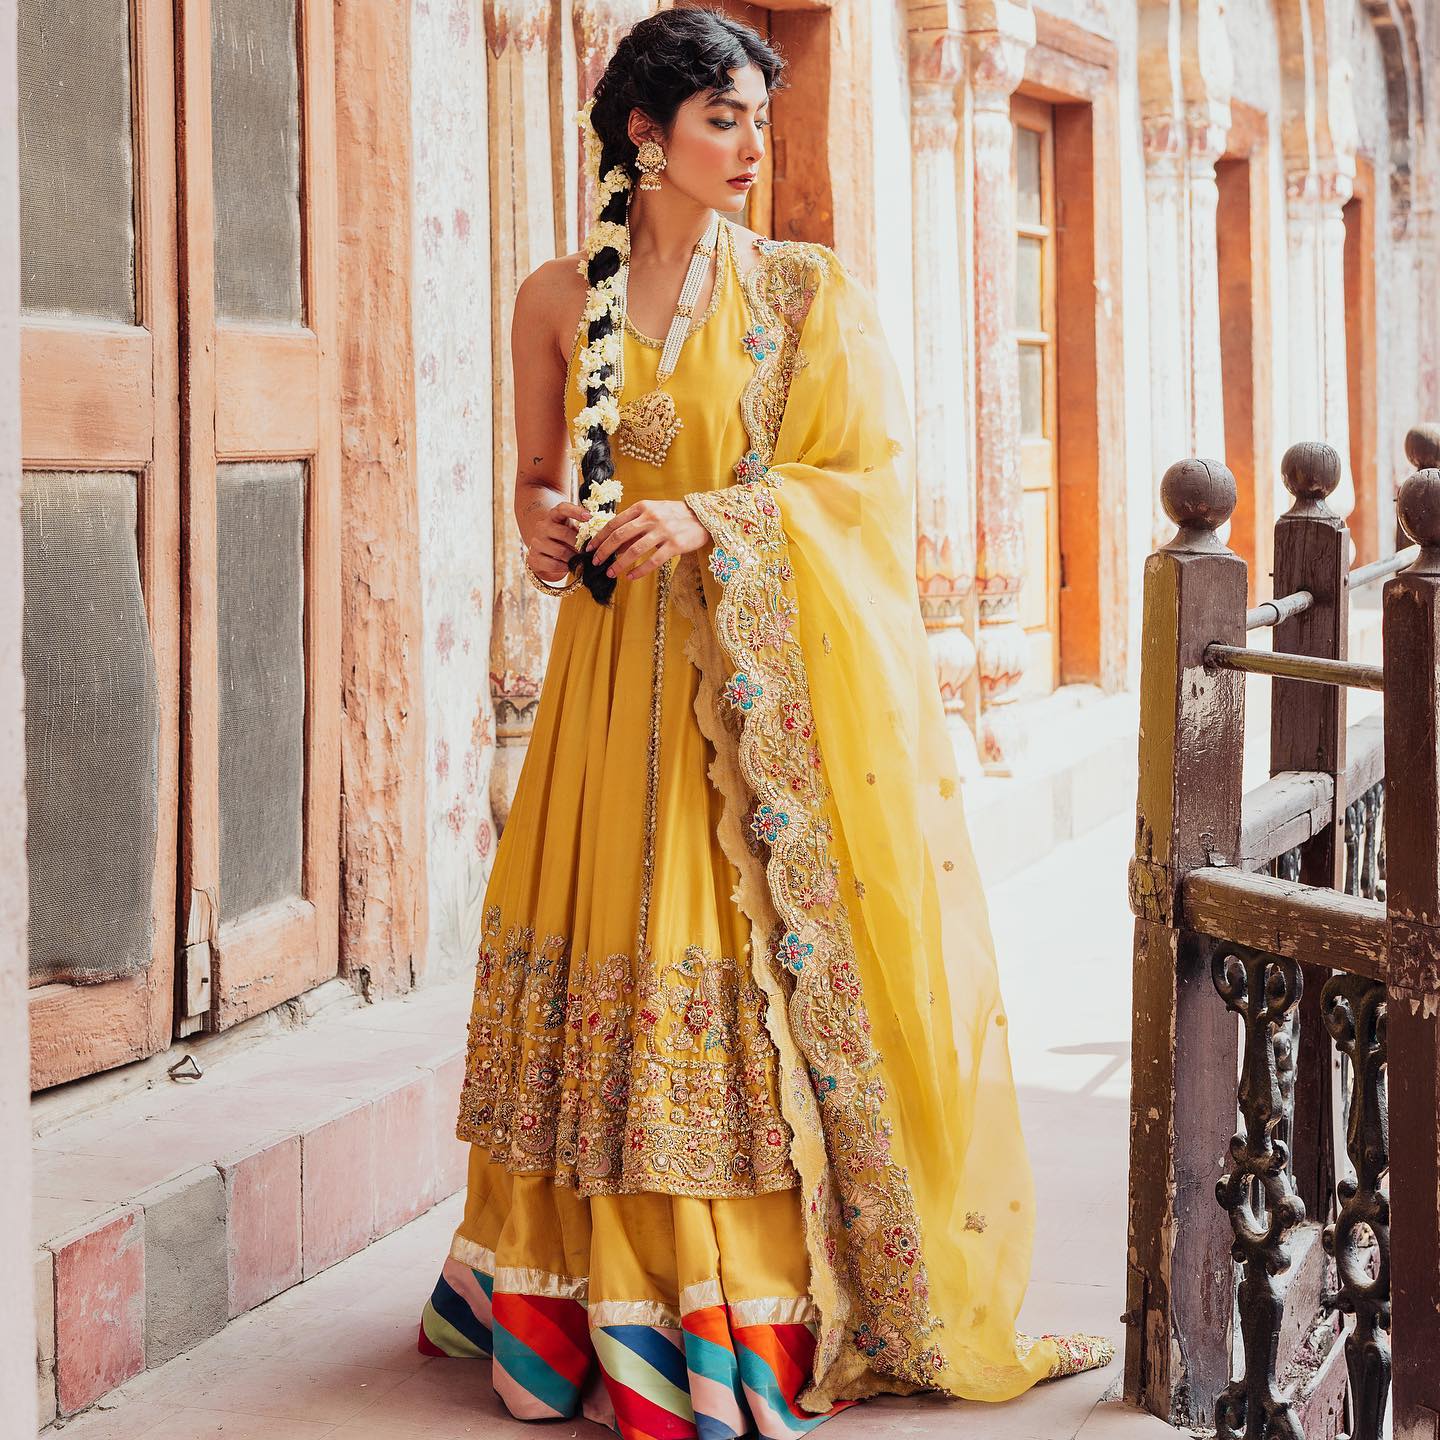 Glamorous Sonakshi Sinha in Blue and Yellow Lehenga Saree - MiaIndia.com